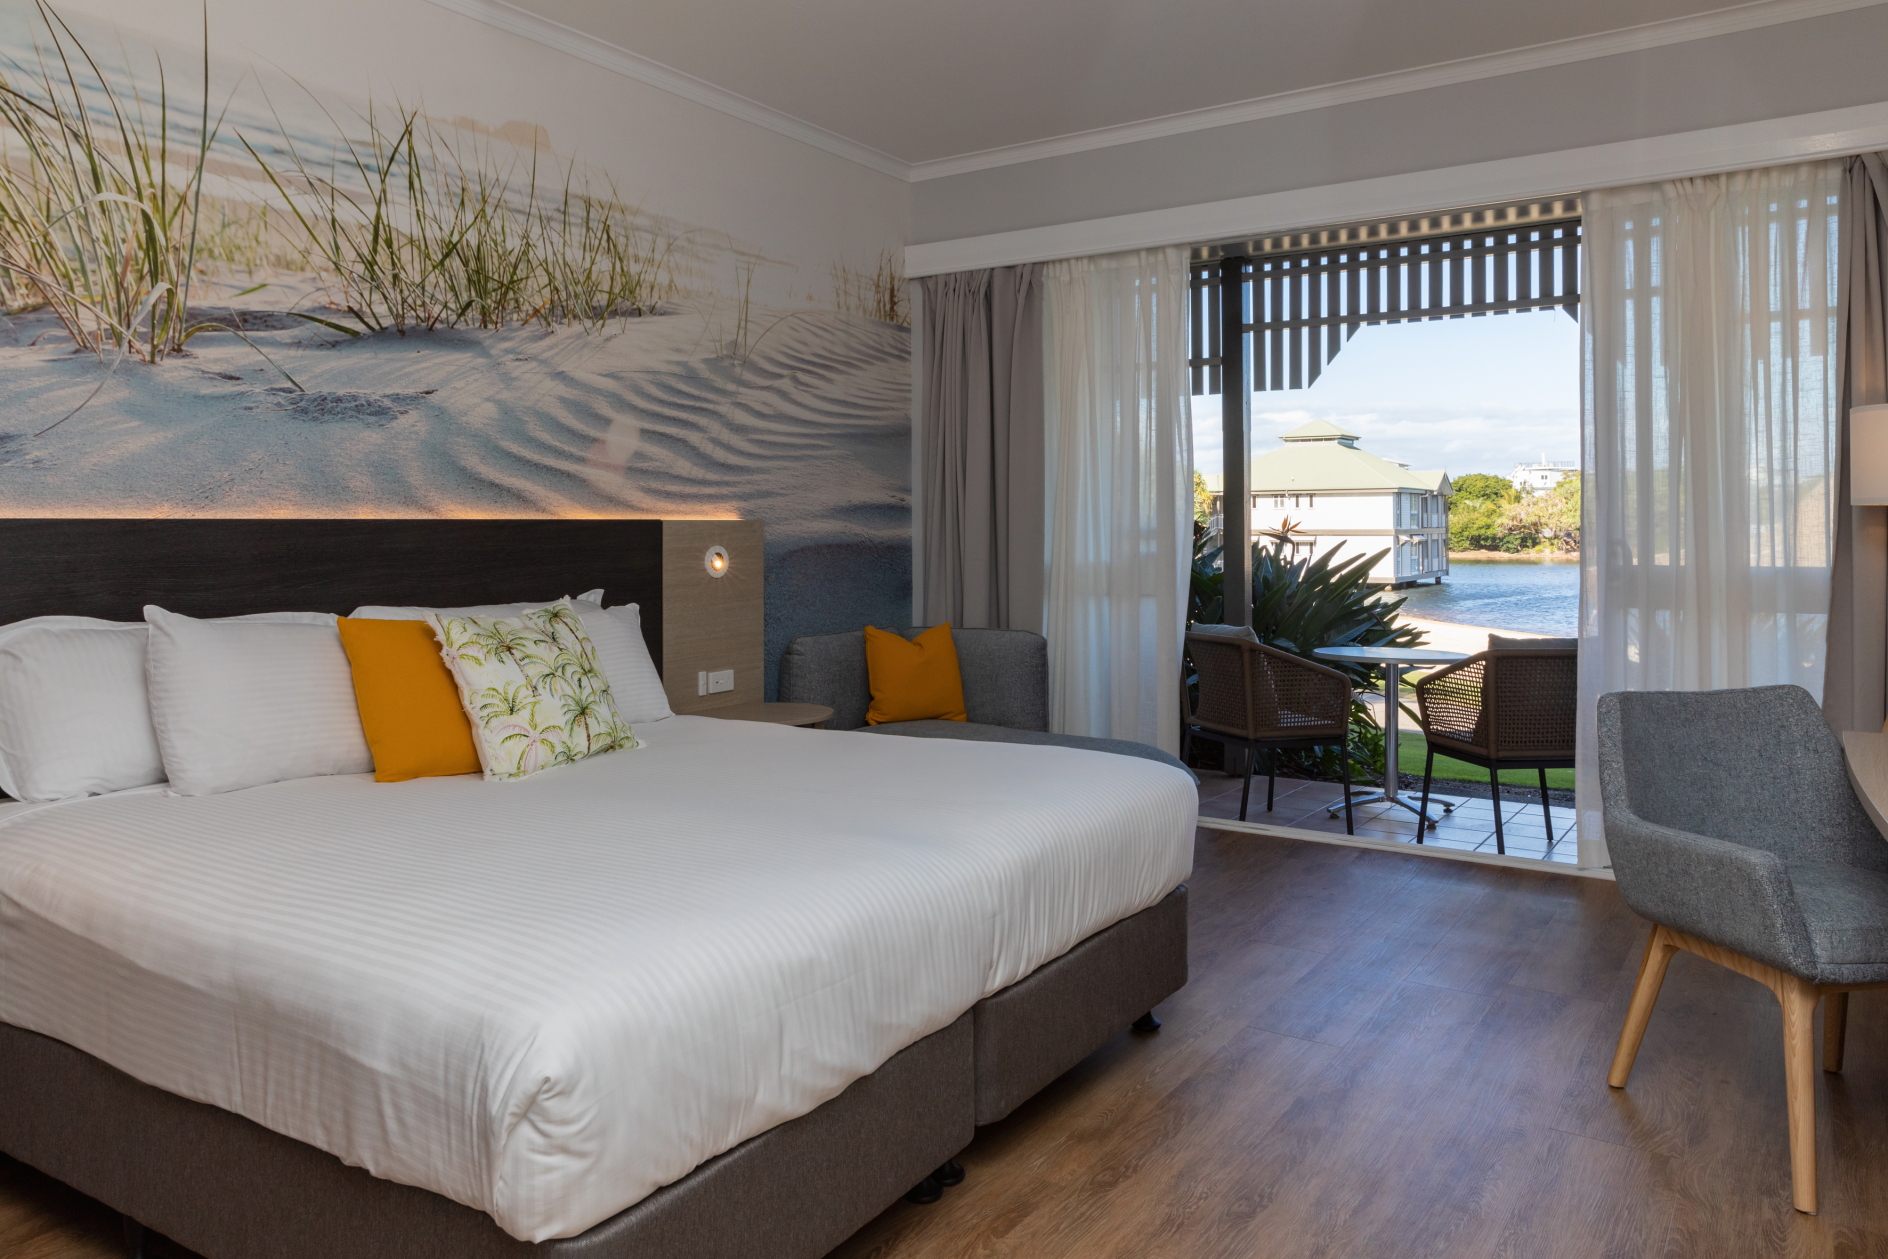 Executive King Room at Novotel Sunshine Coast Resort. Click to enlarge.